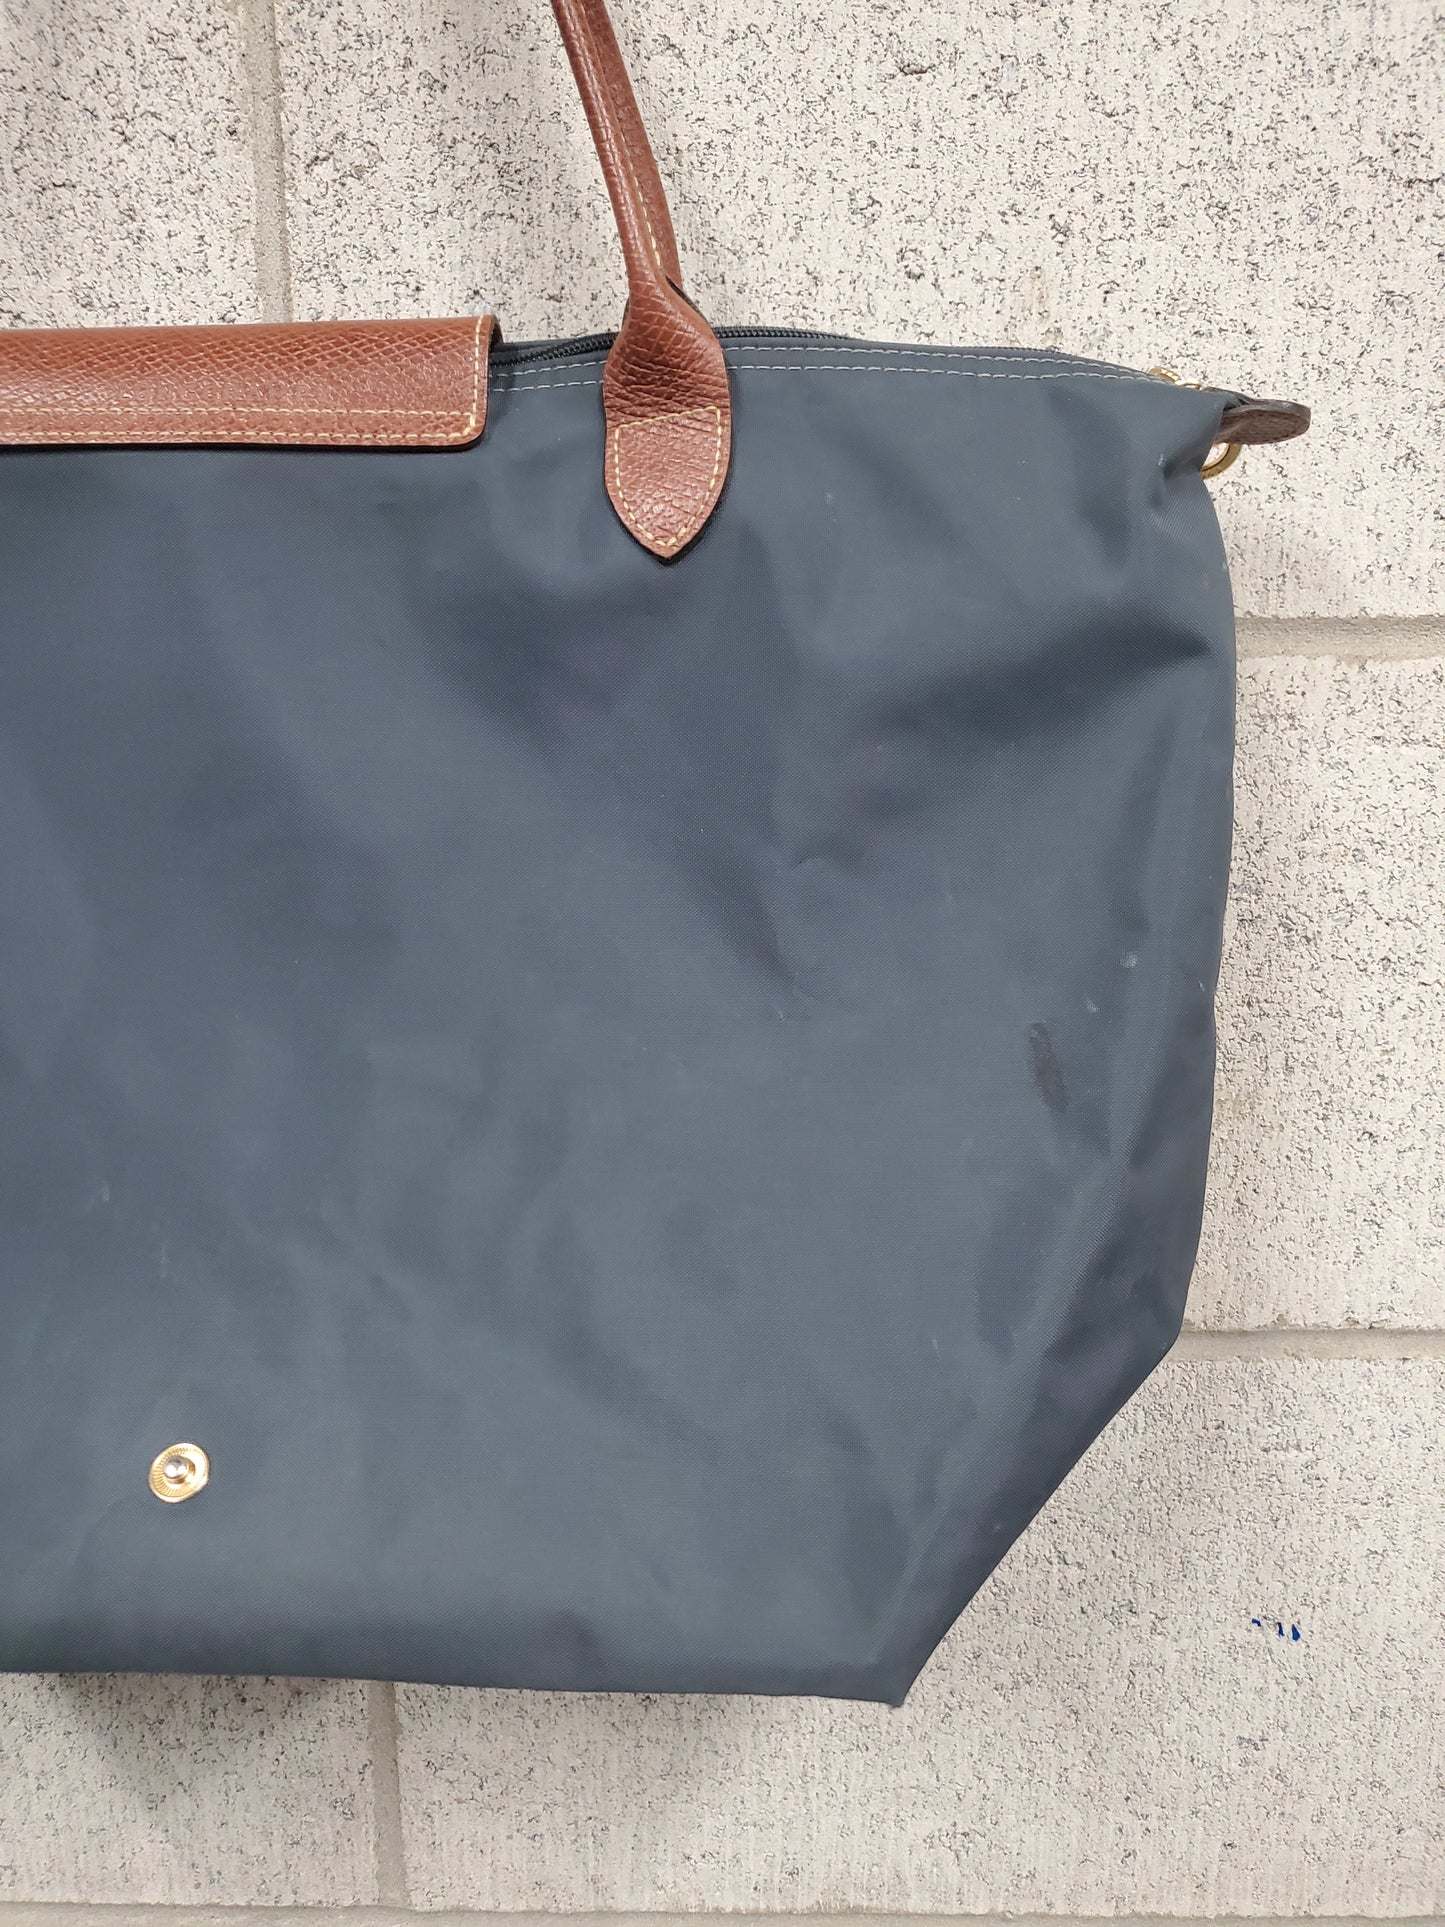 Womens Longchamp Le Pilage Tote Bag Large